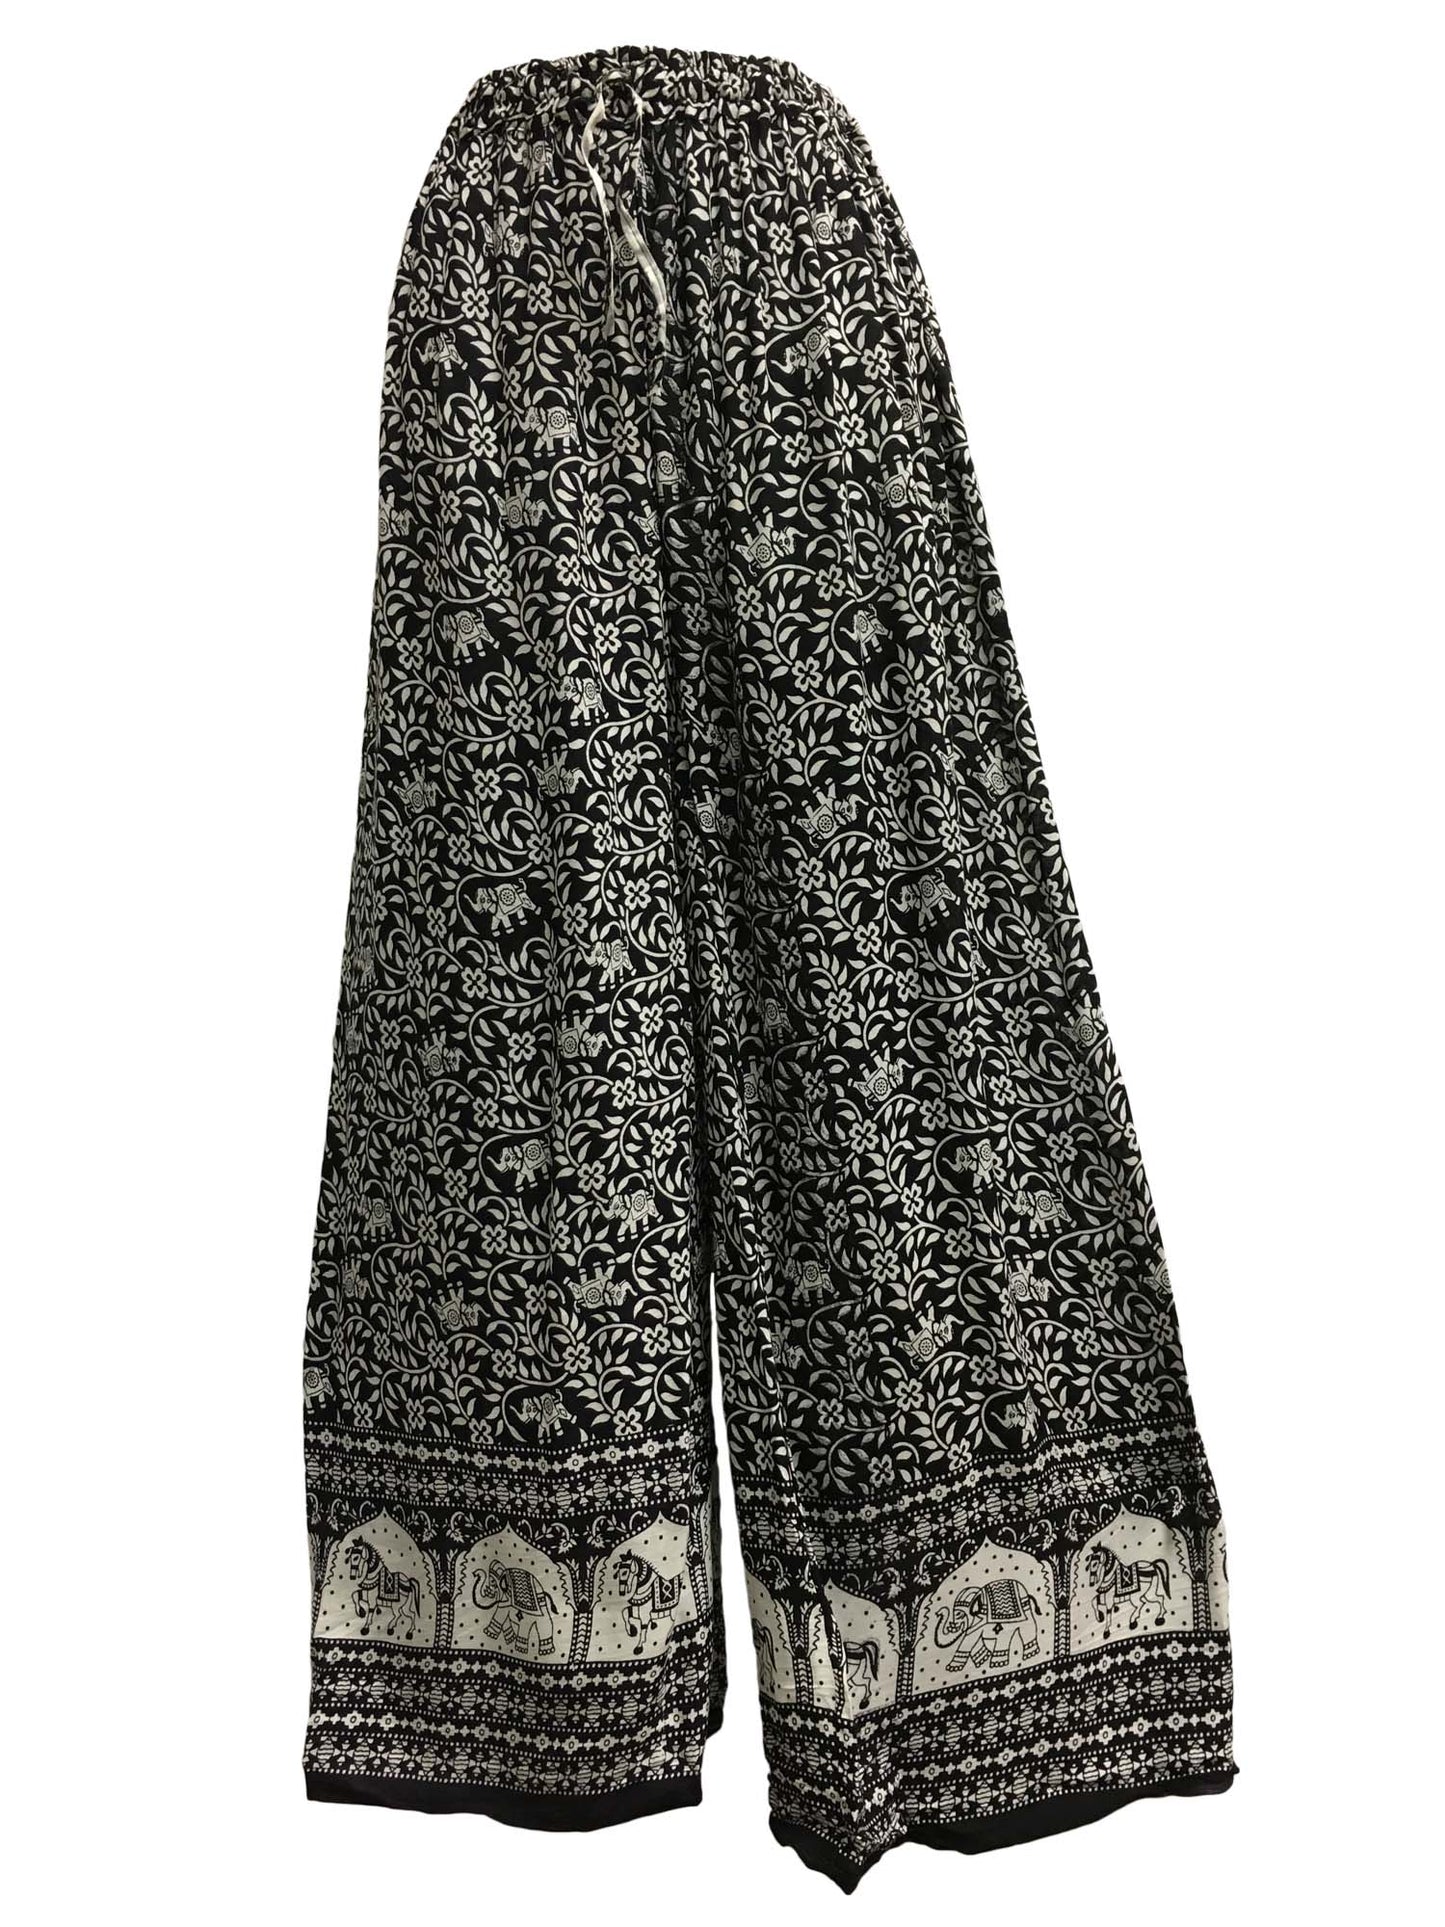 Women's White & Black Ethnic Elephant Print Cotton Wide Leg Casual Palazzo Pants - Ambali Fashion Women's Pants 